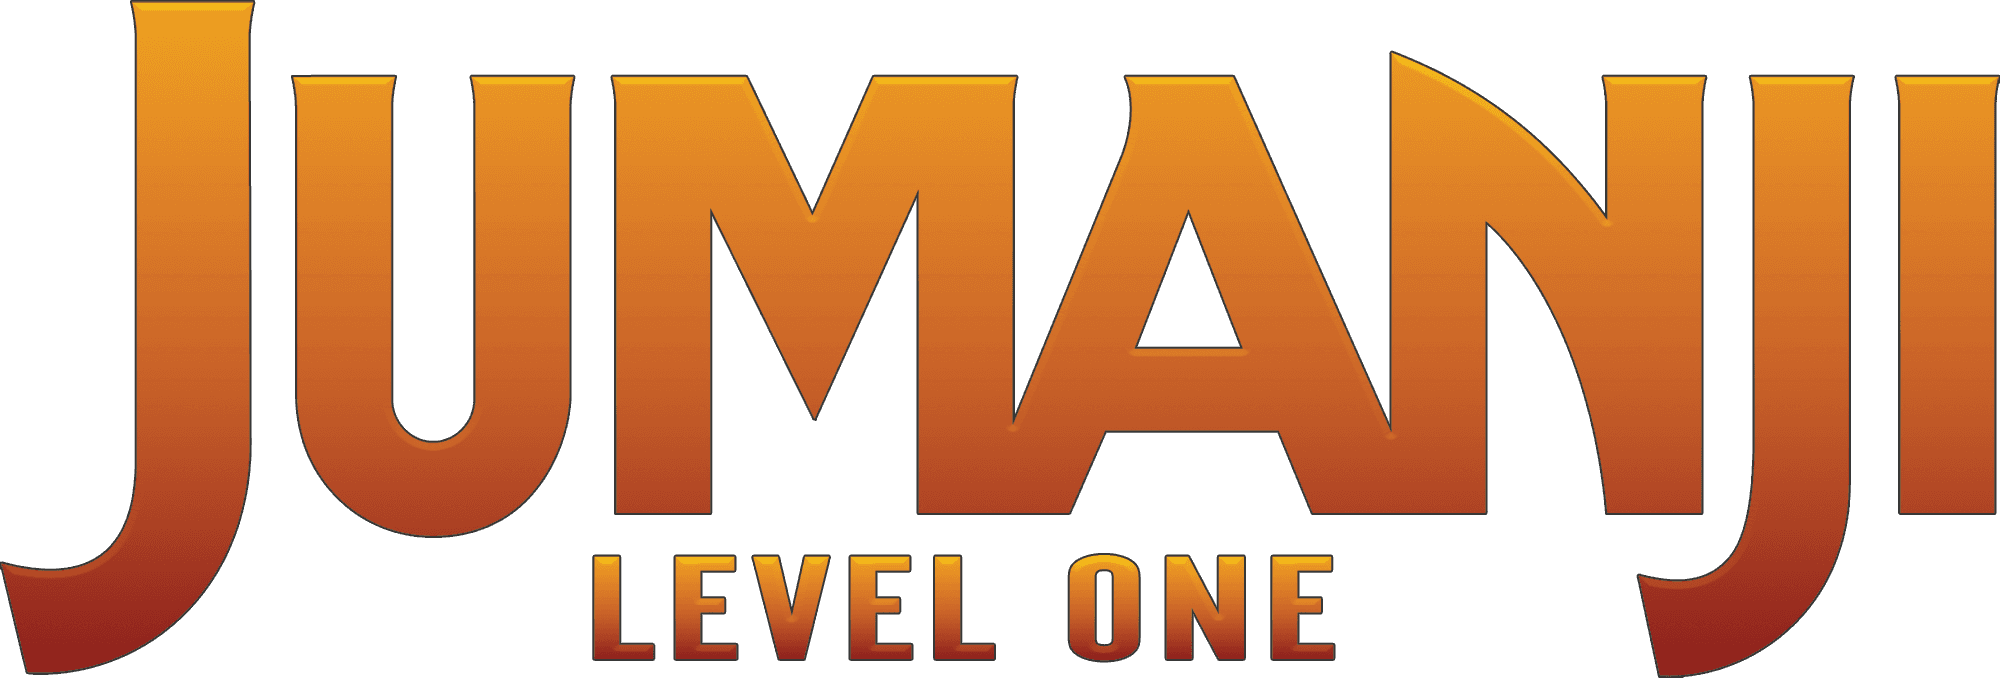 Jumanji: Level One logo